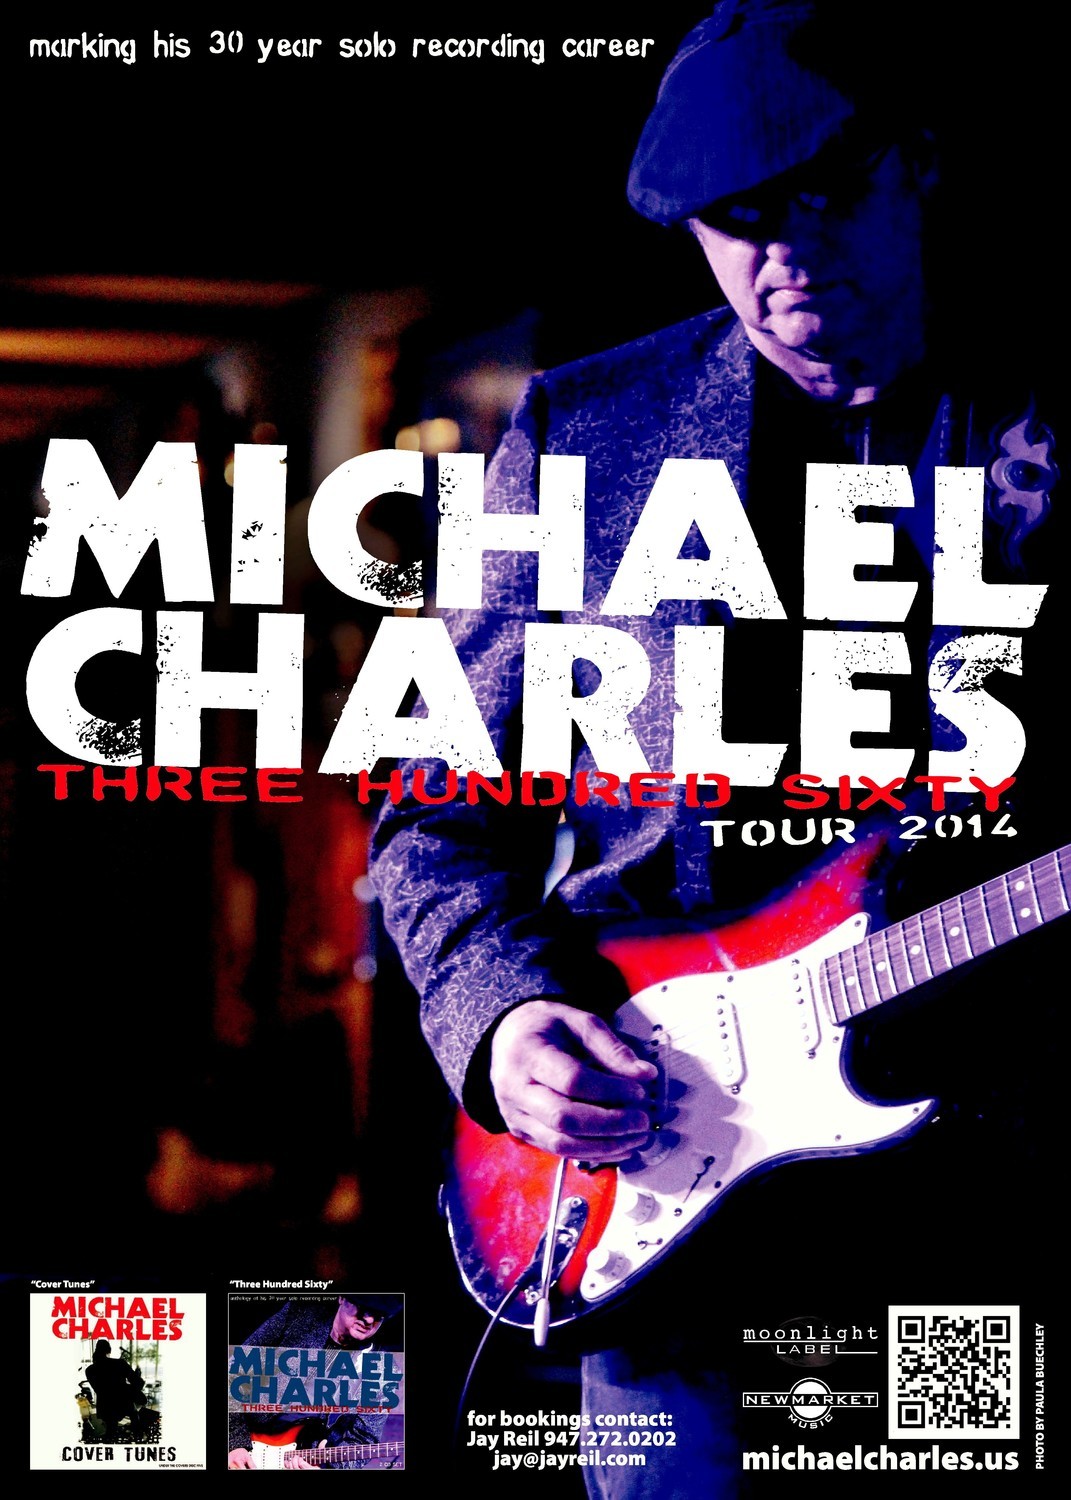 Three Hundred Sixty Tour 2014 / Tour Poster